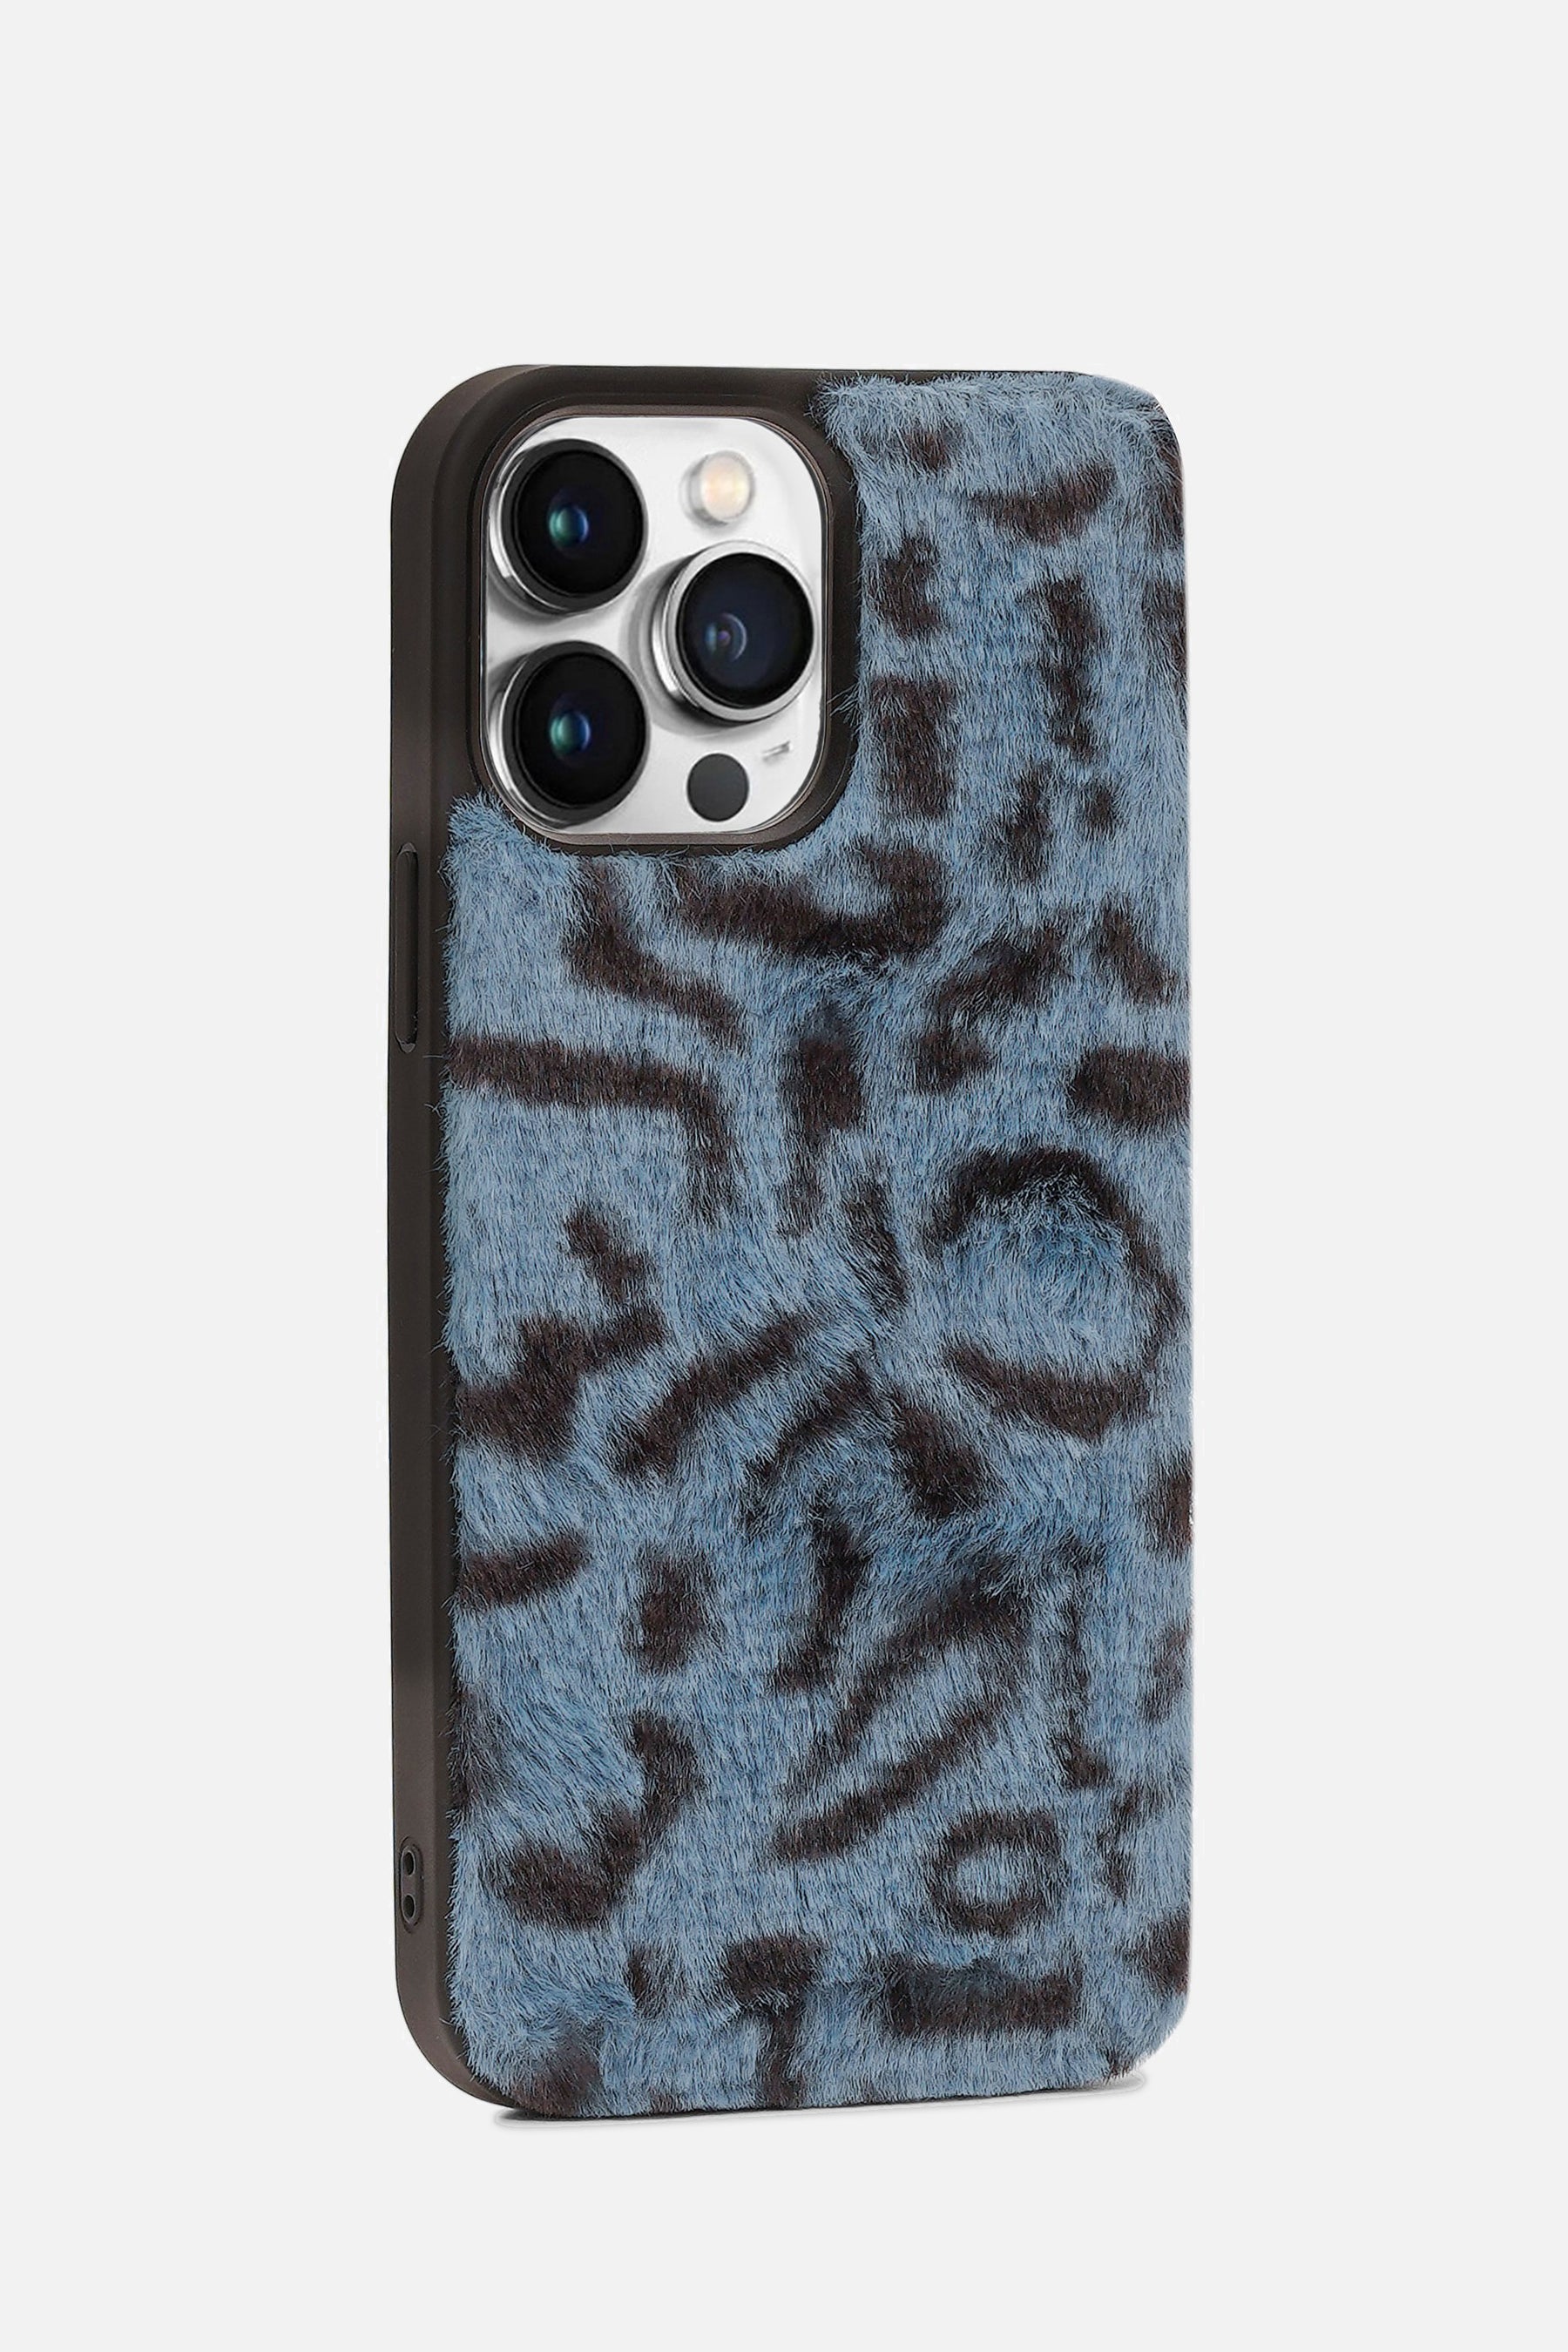 iPhone Printed Fur Case - Dark Blue